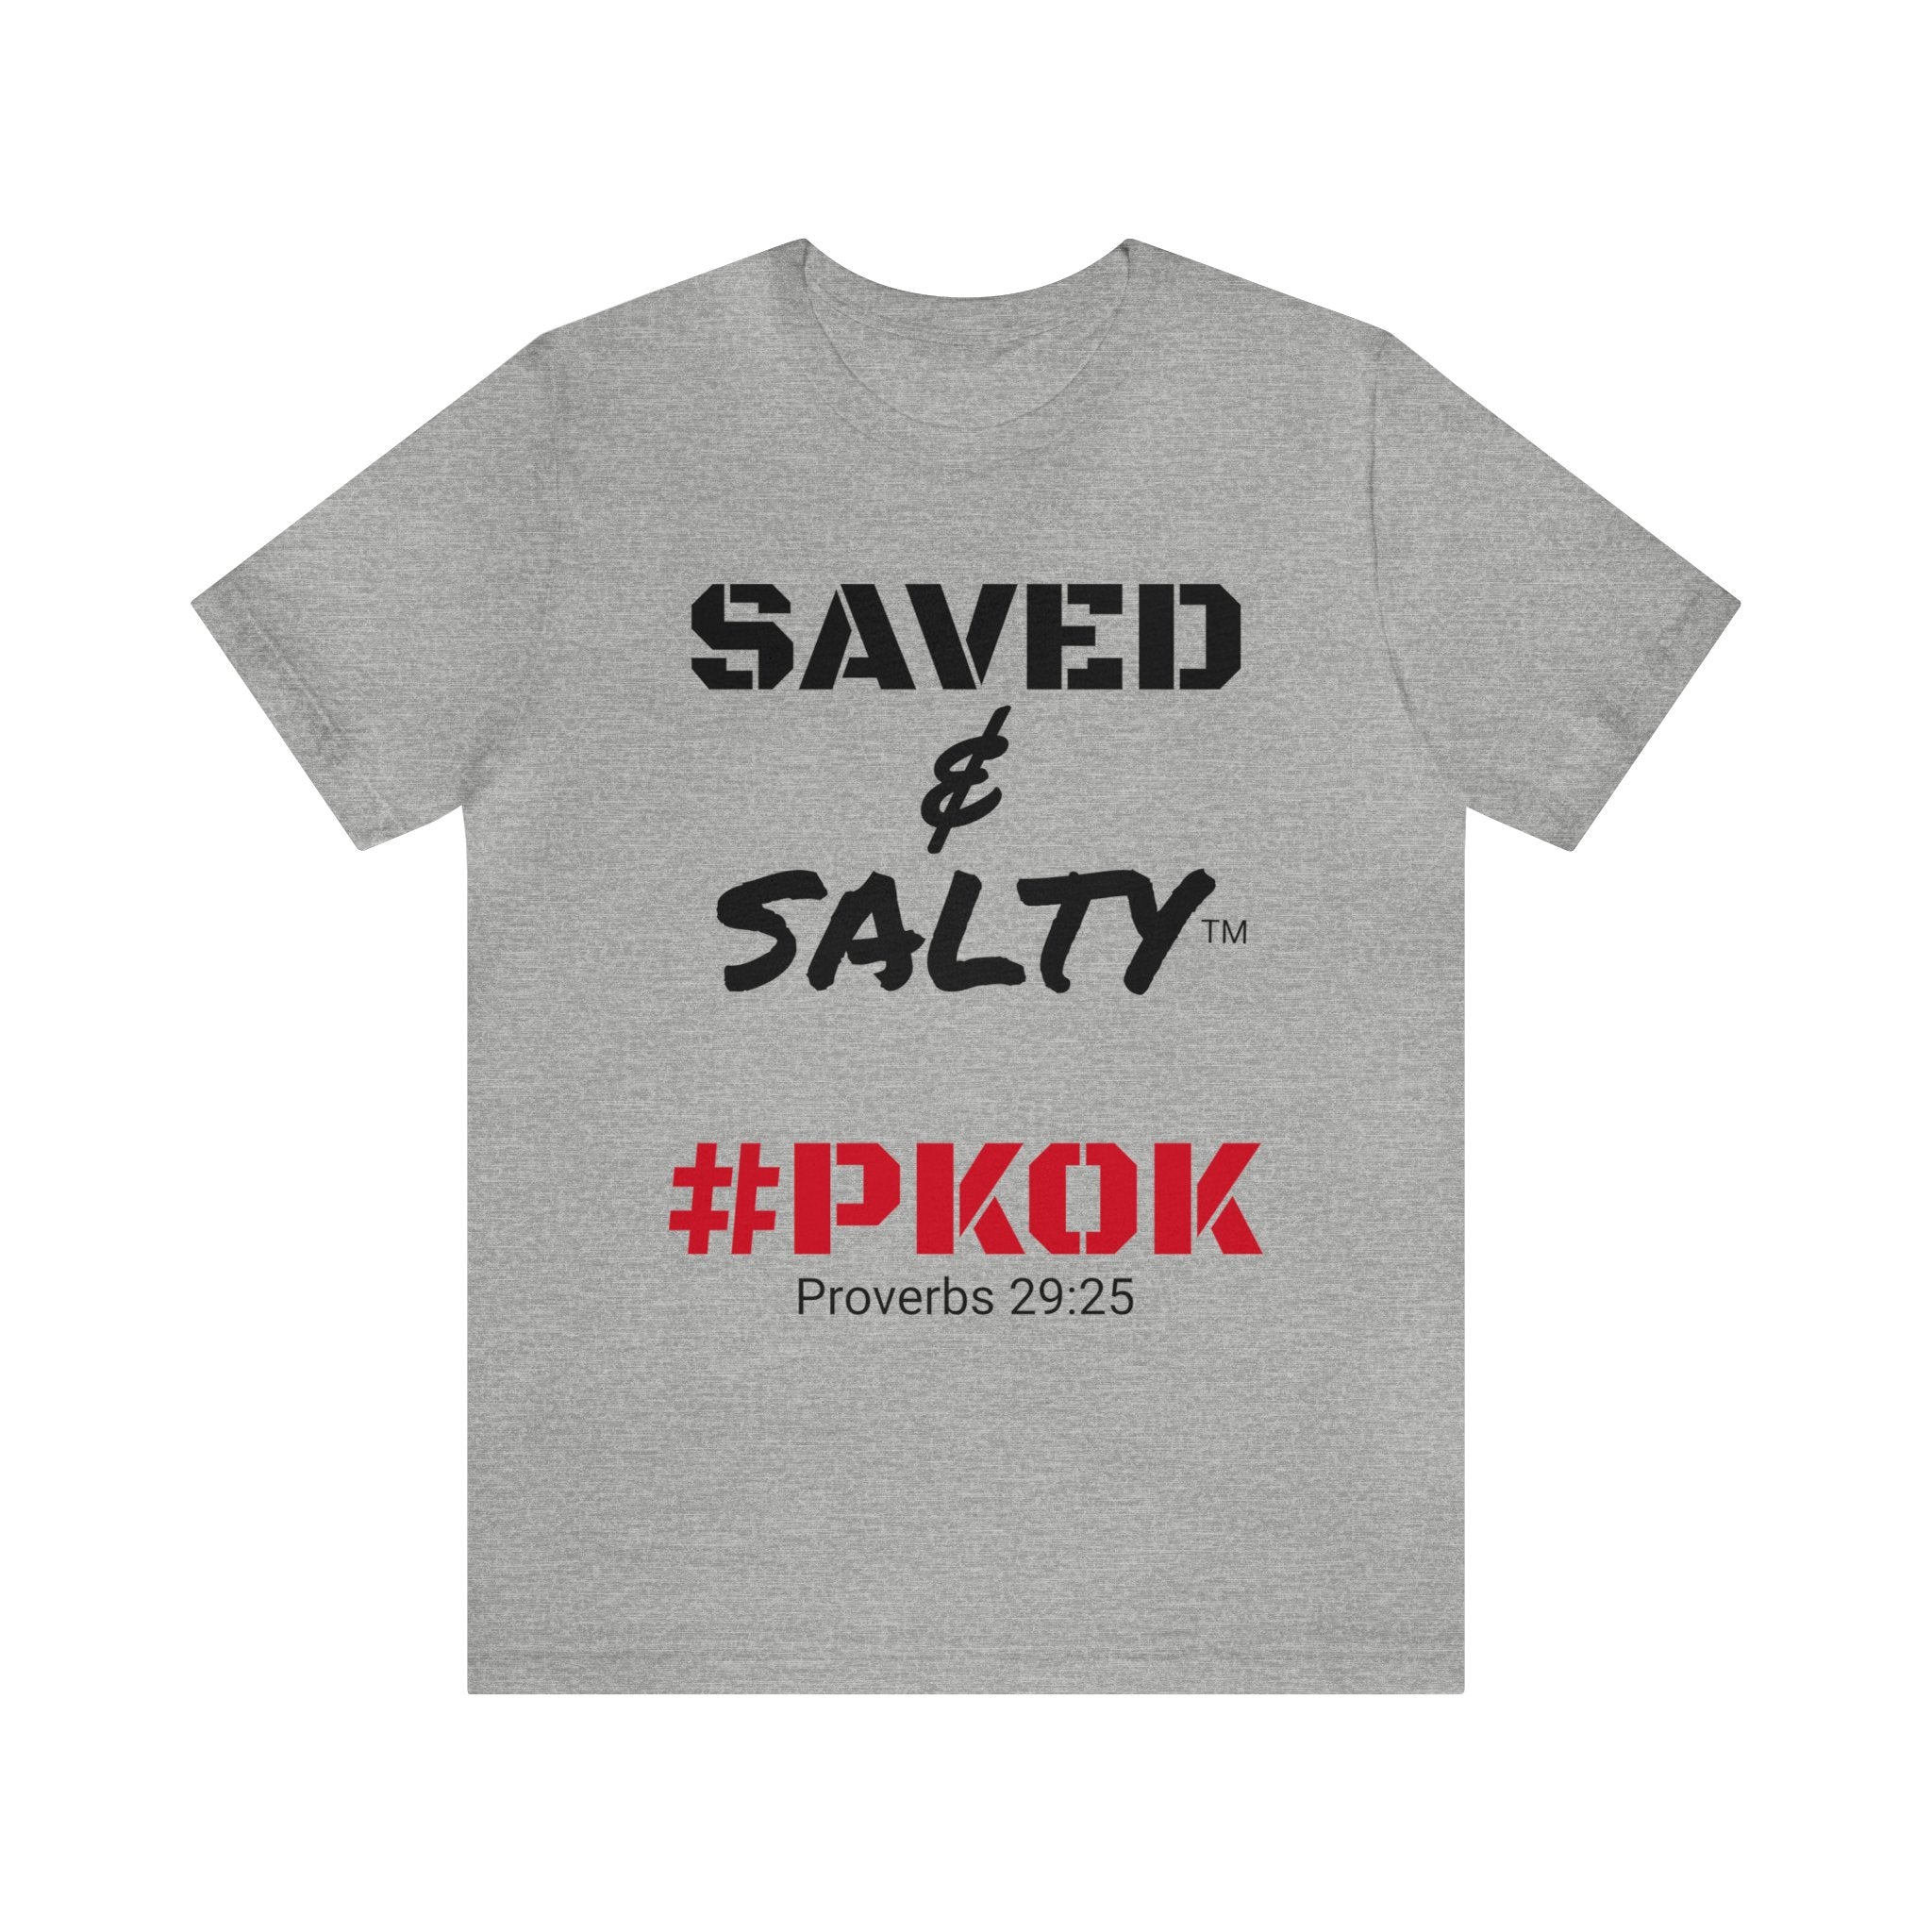 #Saved&Salty #PKOK #Scripture #Proverbs 29:25 #2Timothy1:7 #Unisex #Jersey #ShortSleeve #Tee